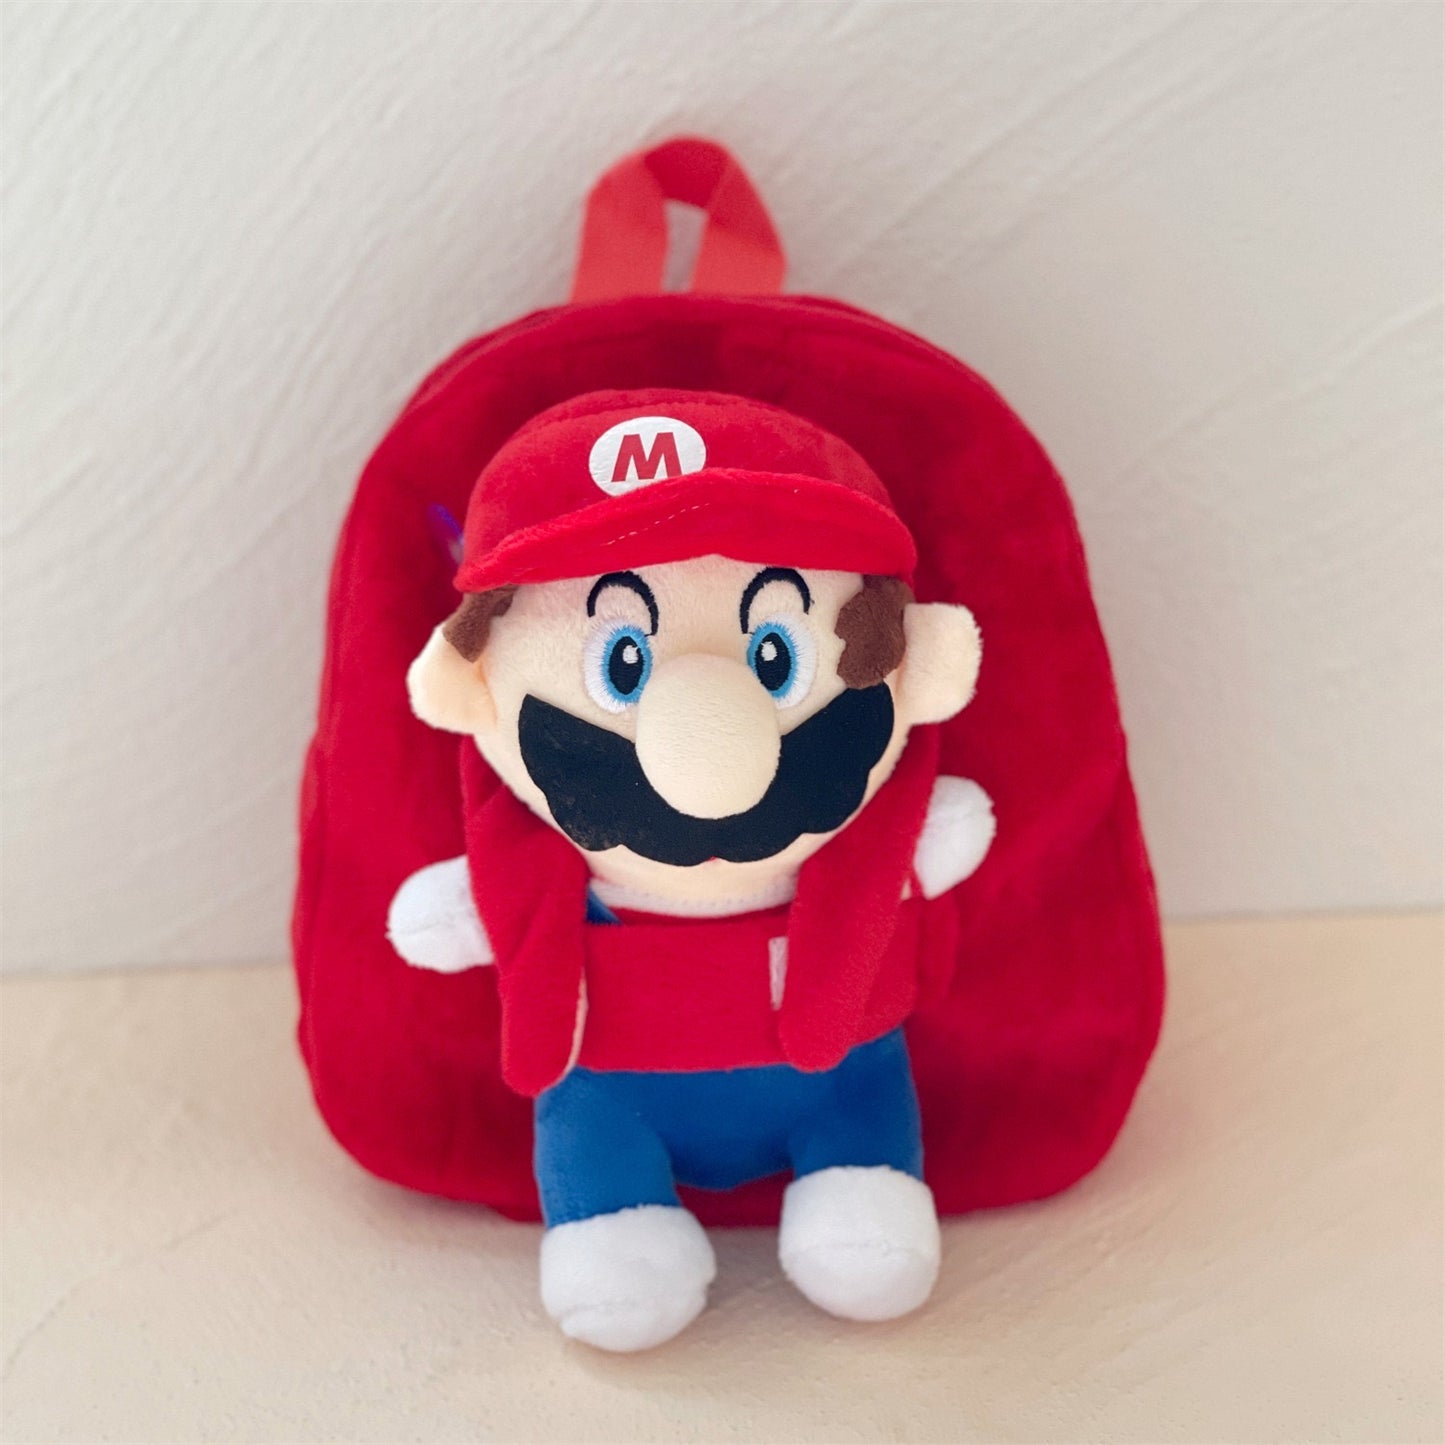 Detachable Mario soft plush backpack